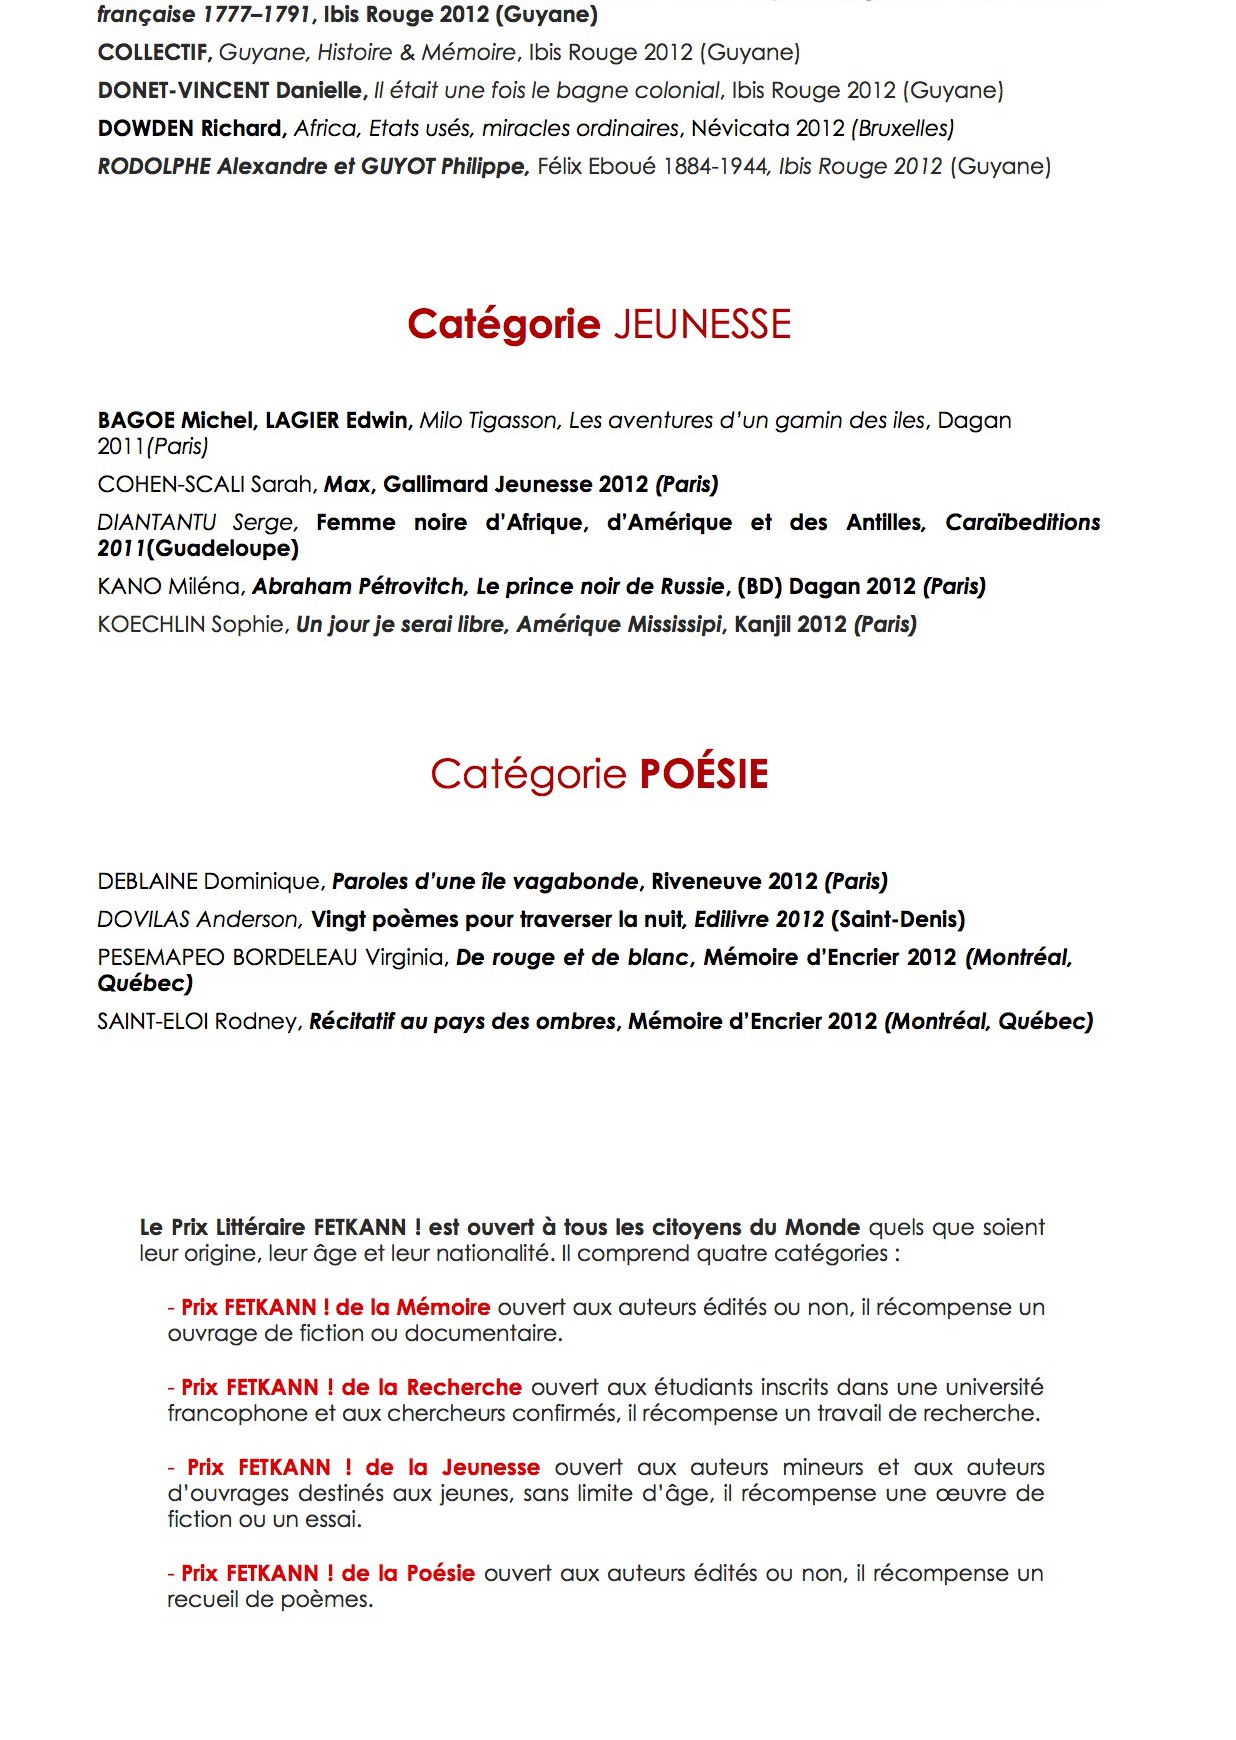 CP Prix_FETKANN_Pressentis 2012-2